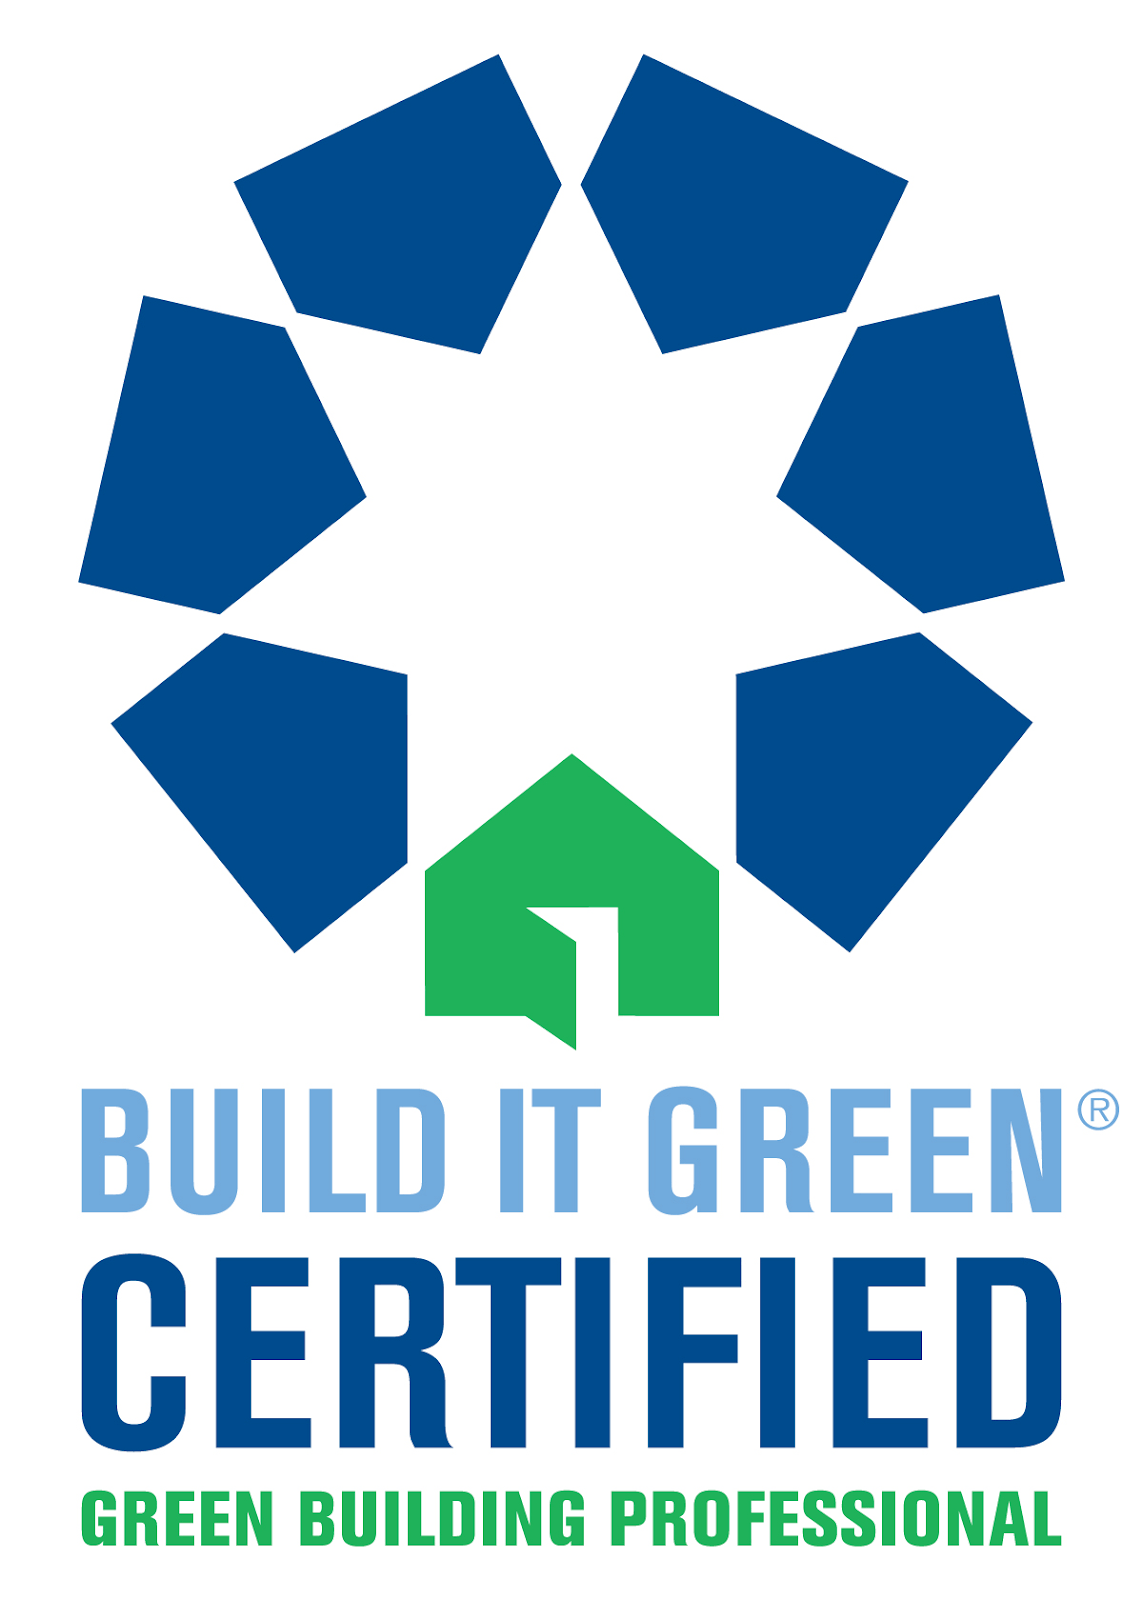 Build it green certified | green building professional | Supple Homes inc | Menlo Park CA 94025